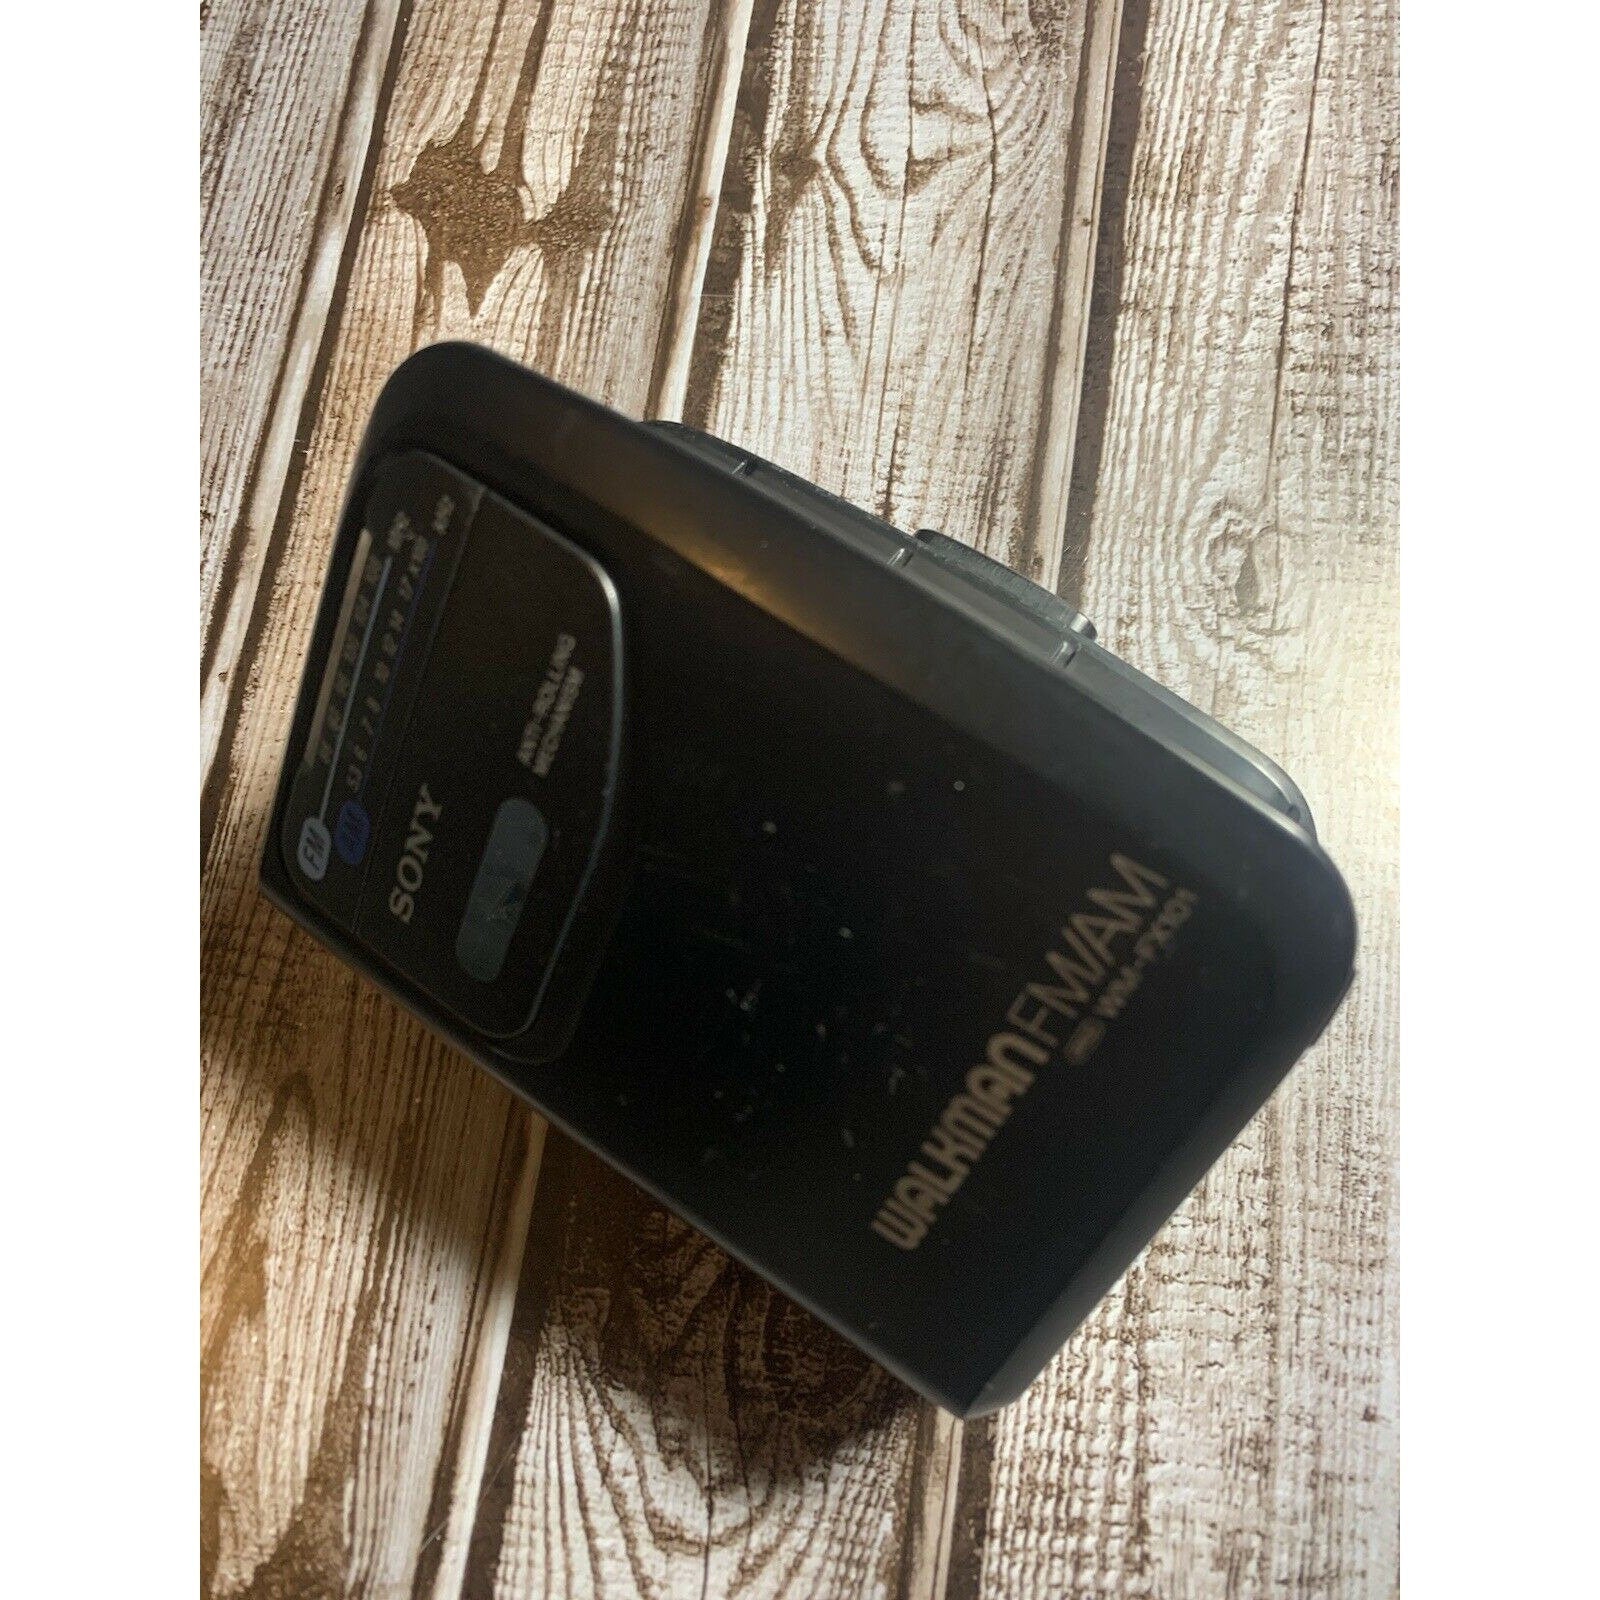 Sony Walkman WM-FX101 Am/fm Radio Cassette Tape Player